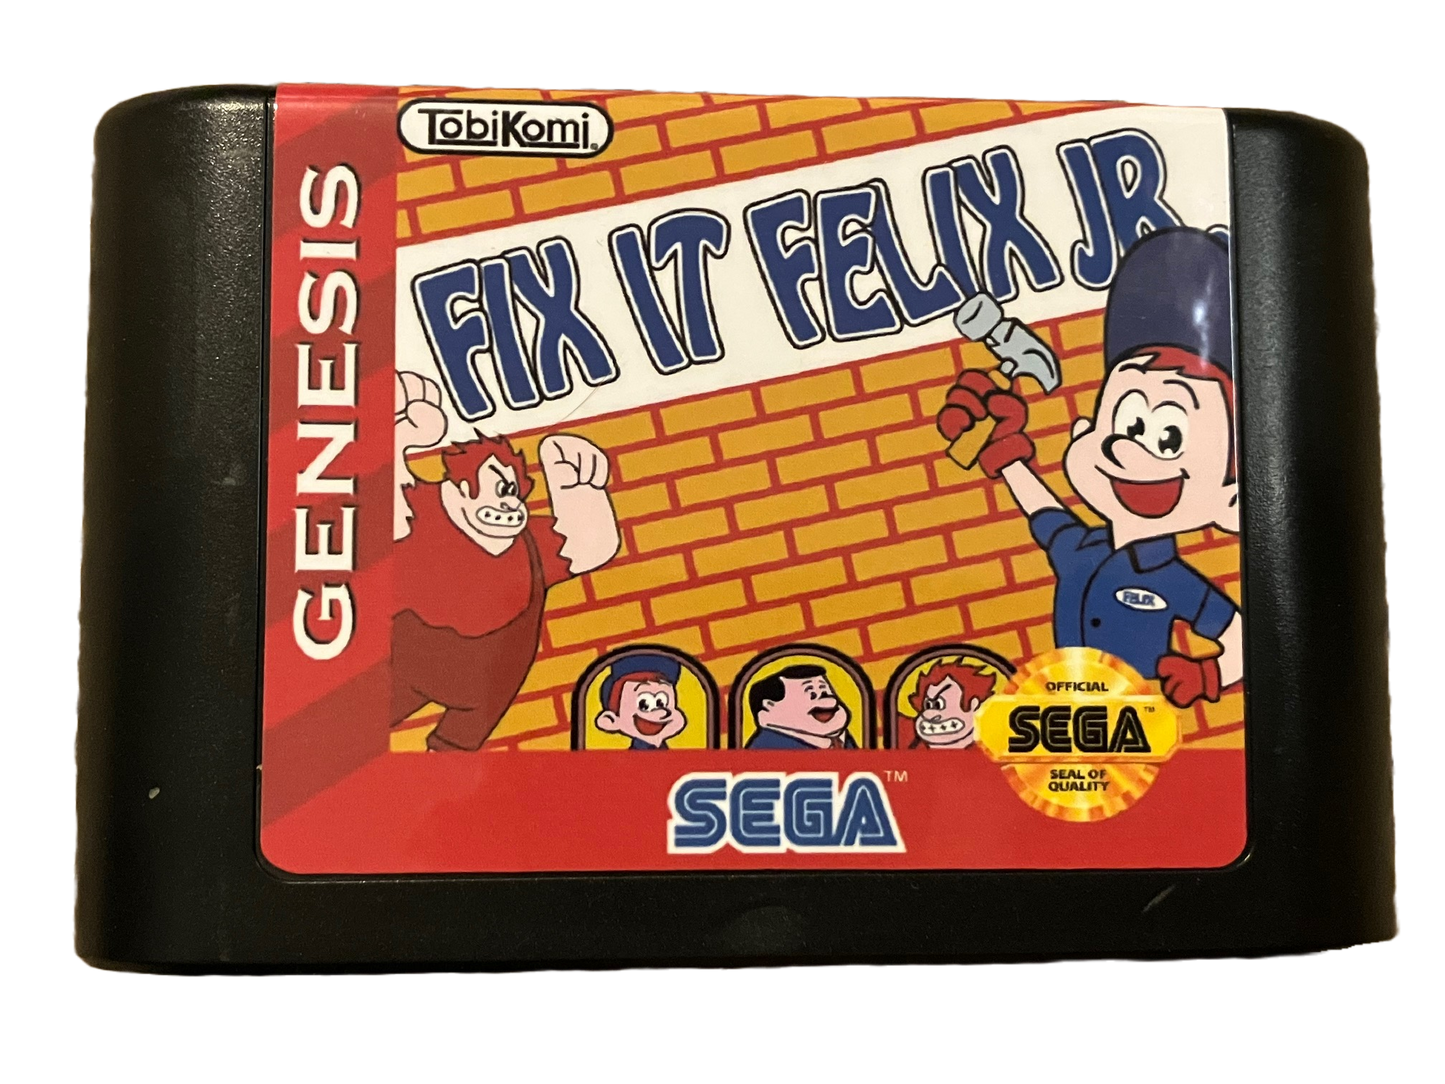 Fix It Felix Jr Sega Genesis Video Game